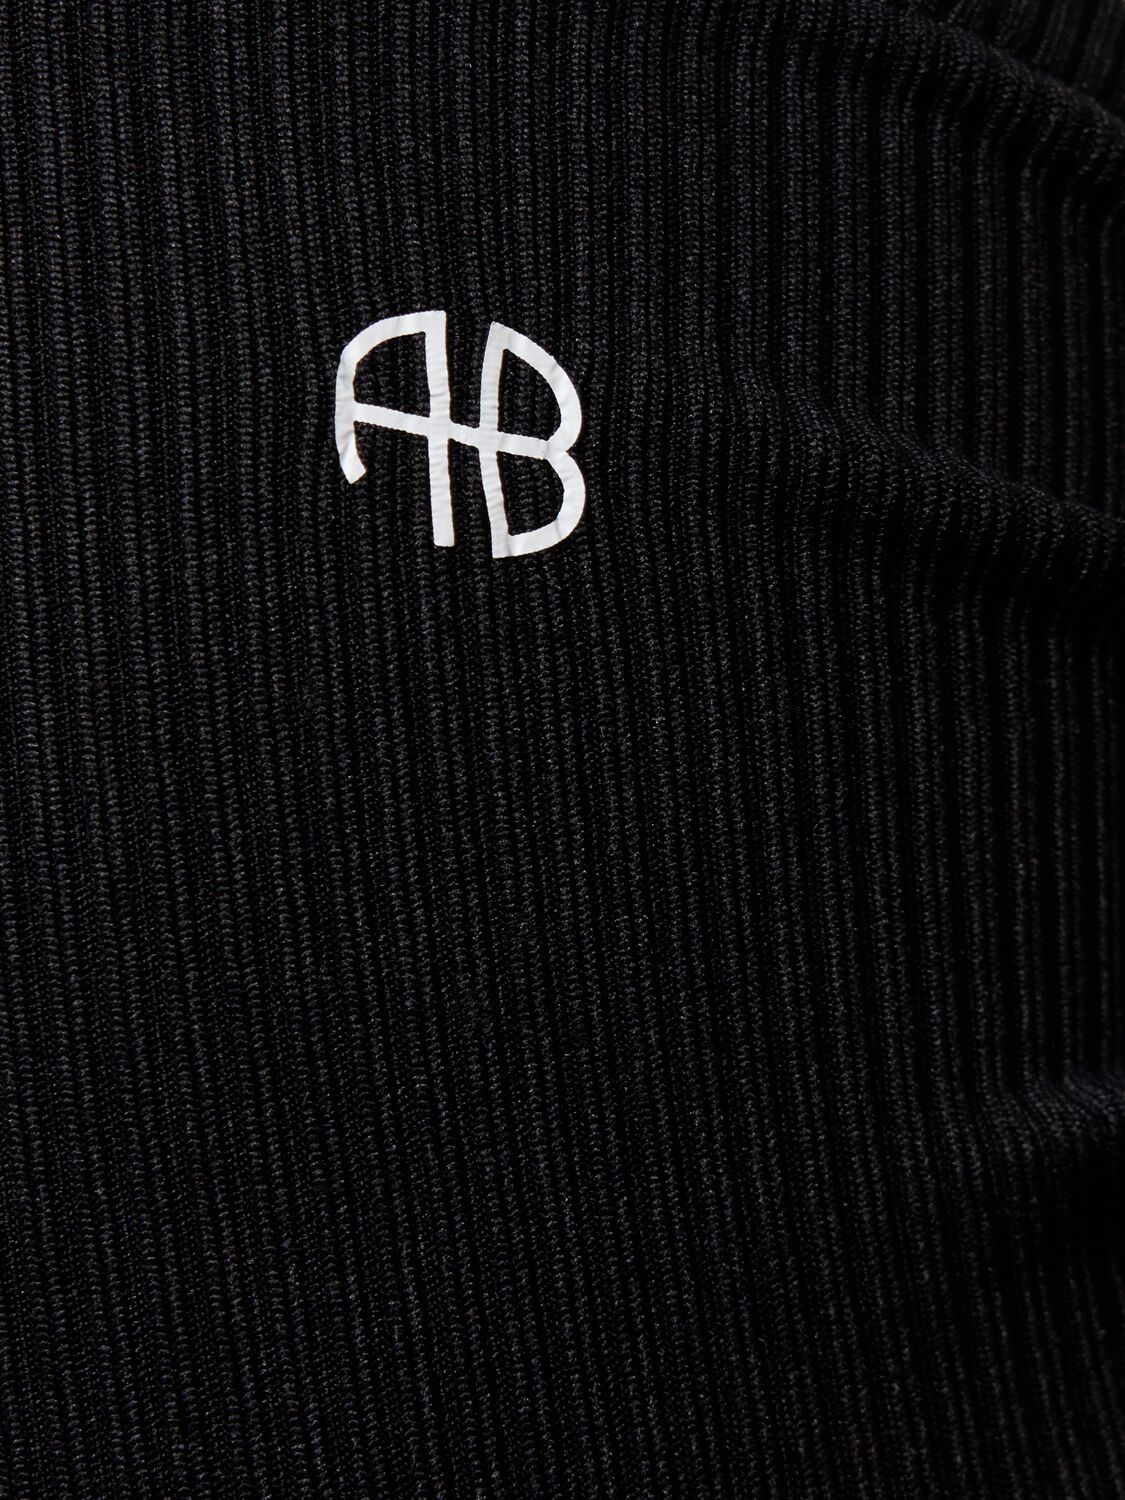 Shop Anine Bing Aimee Stretch Jersey Leggings In Black